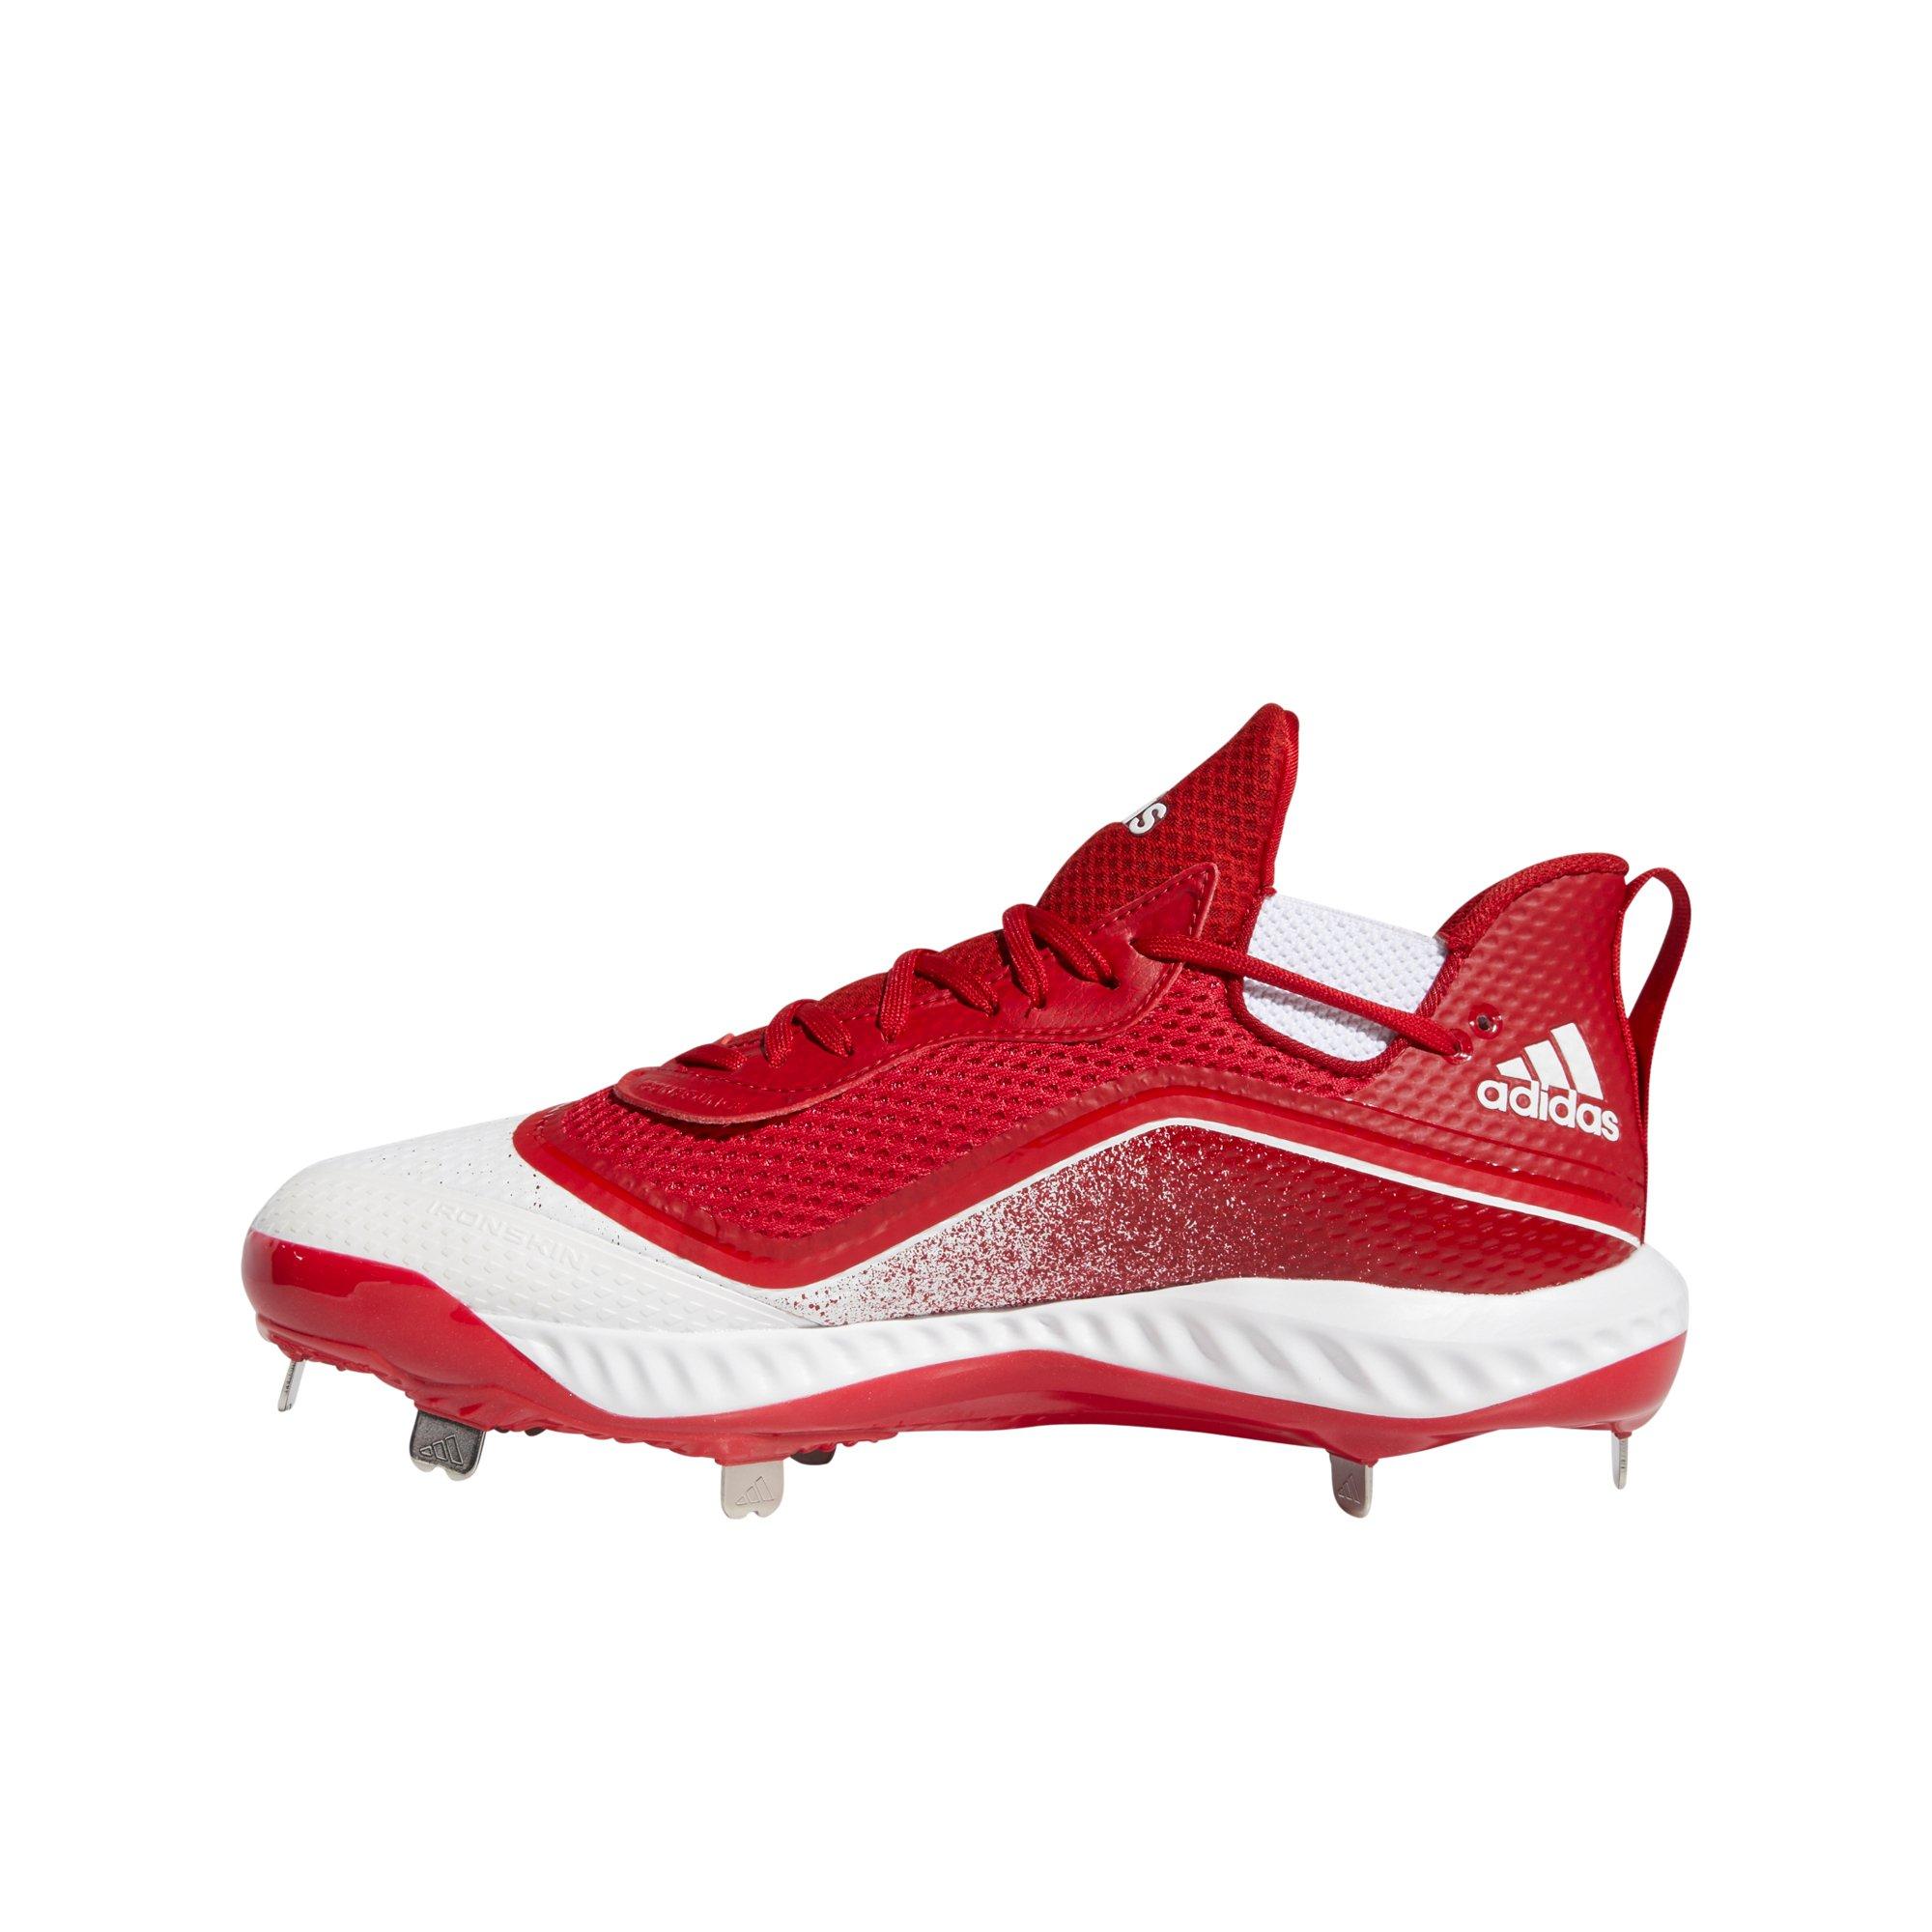 red adidas baseball cleats